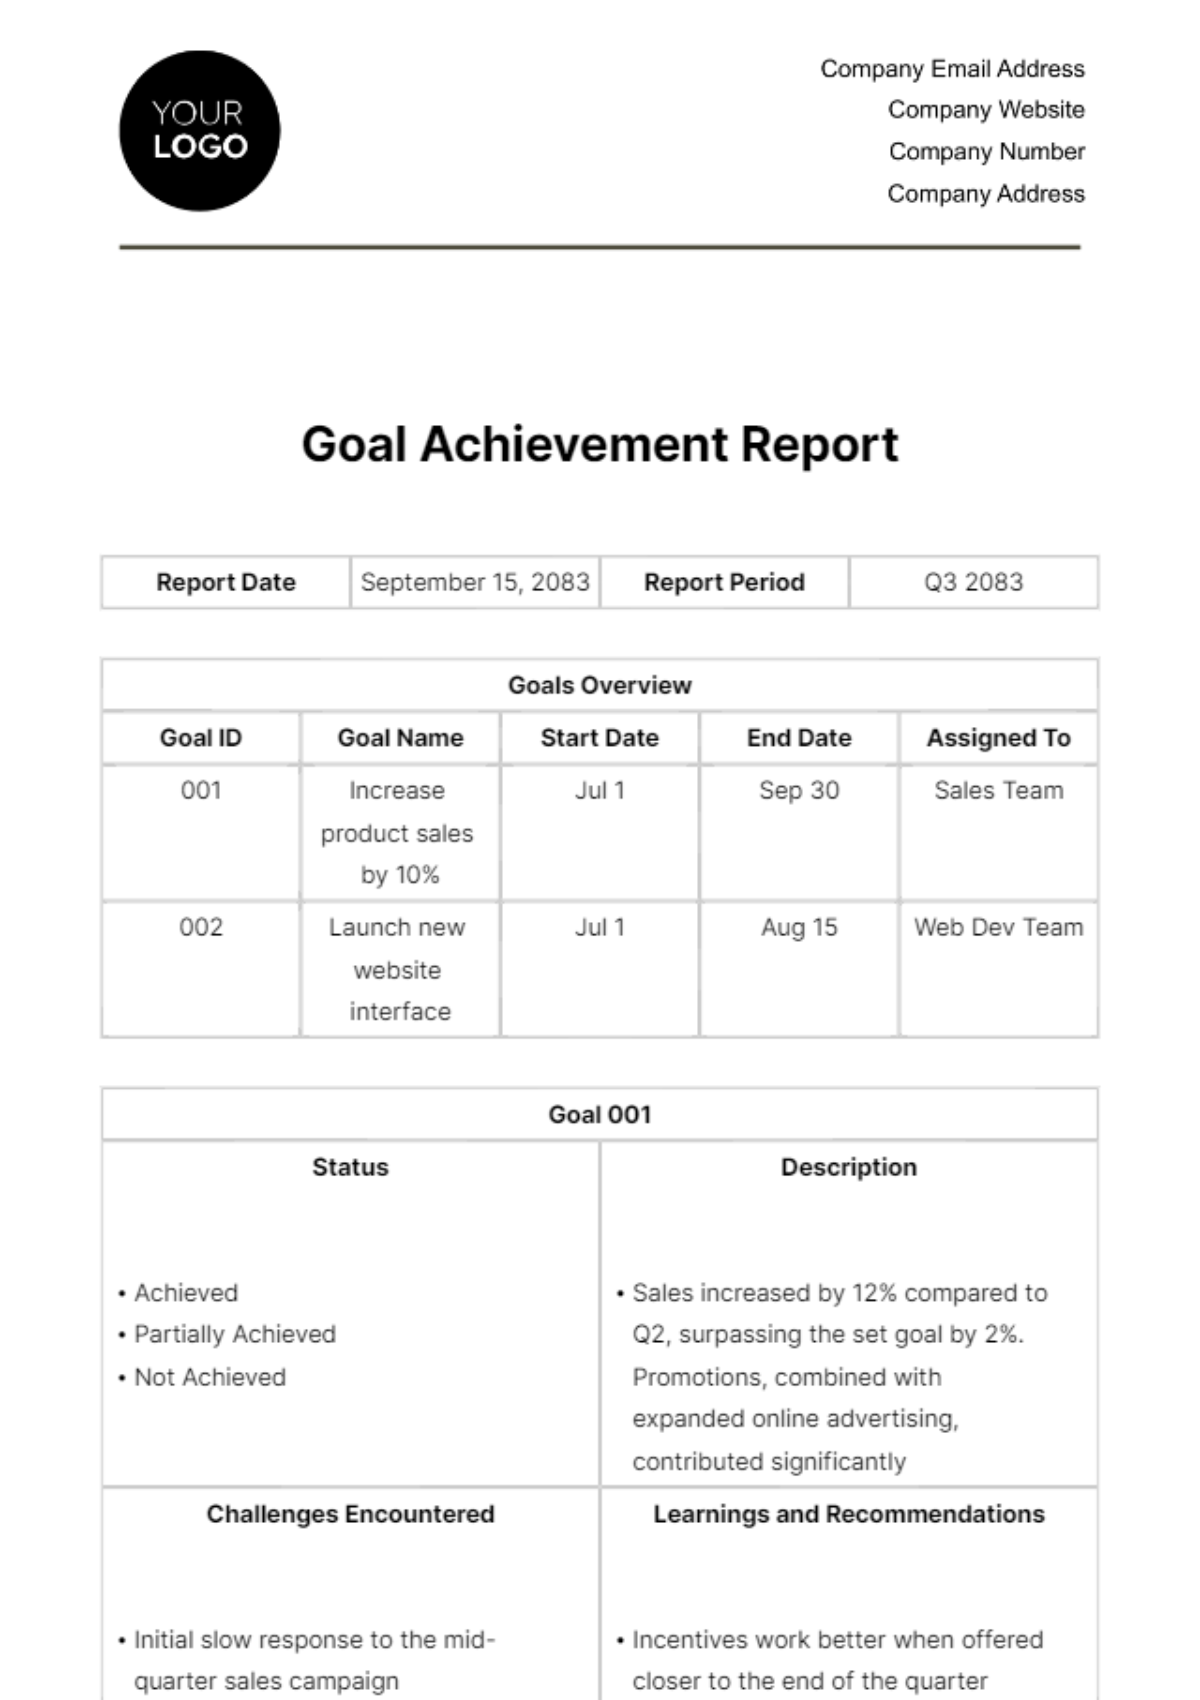 Free Goal Achievement Report HR Template